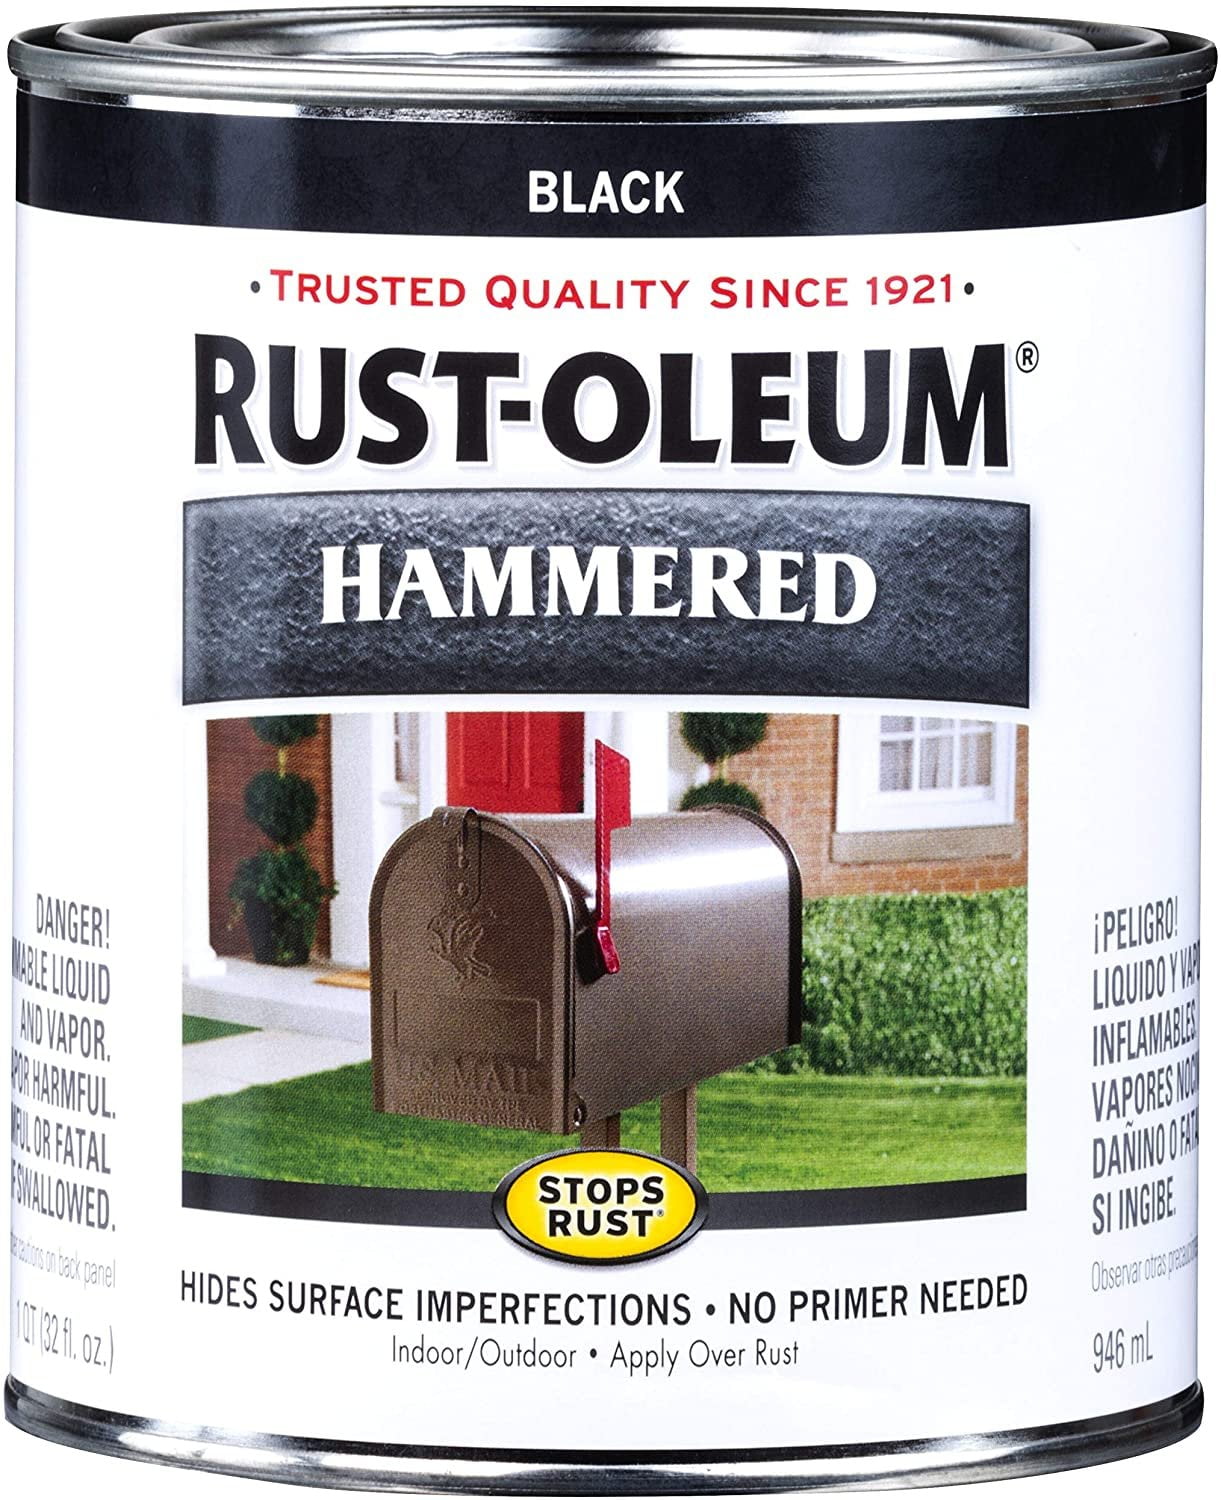 Rust-Oleum Industrial Zinsser B-I-N Shellac-Base Primers, 12 oz, Black, 6  CAN